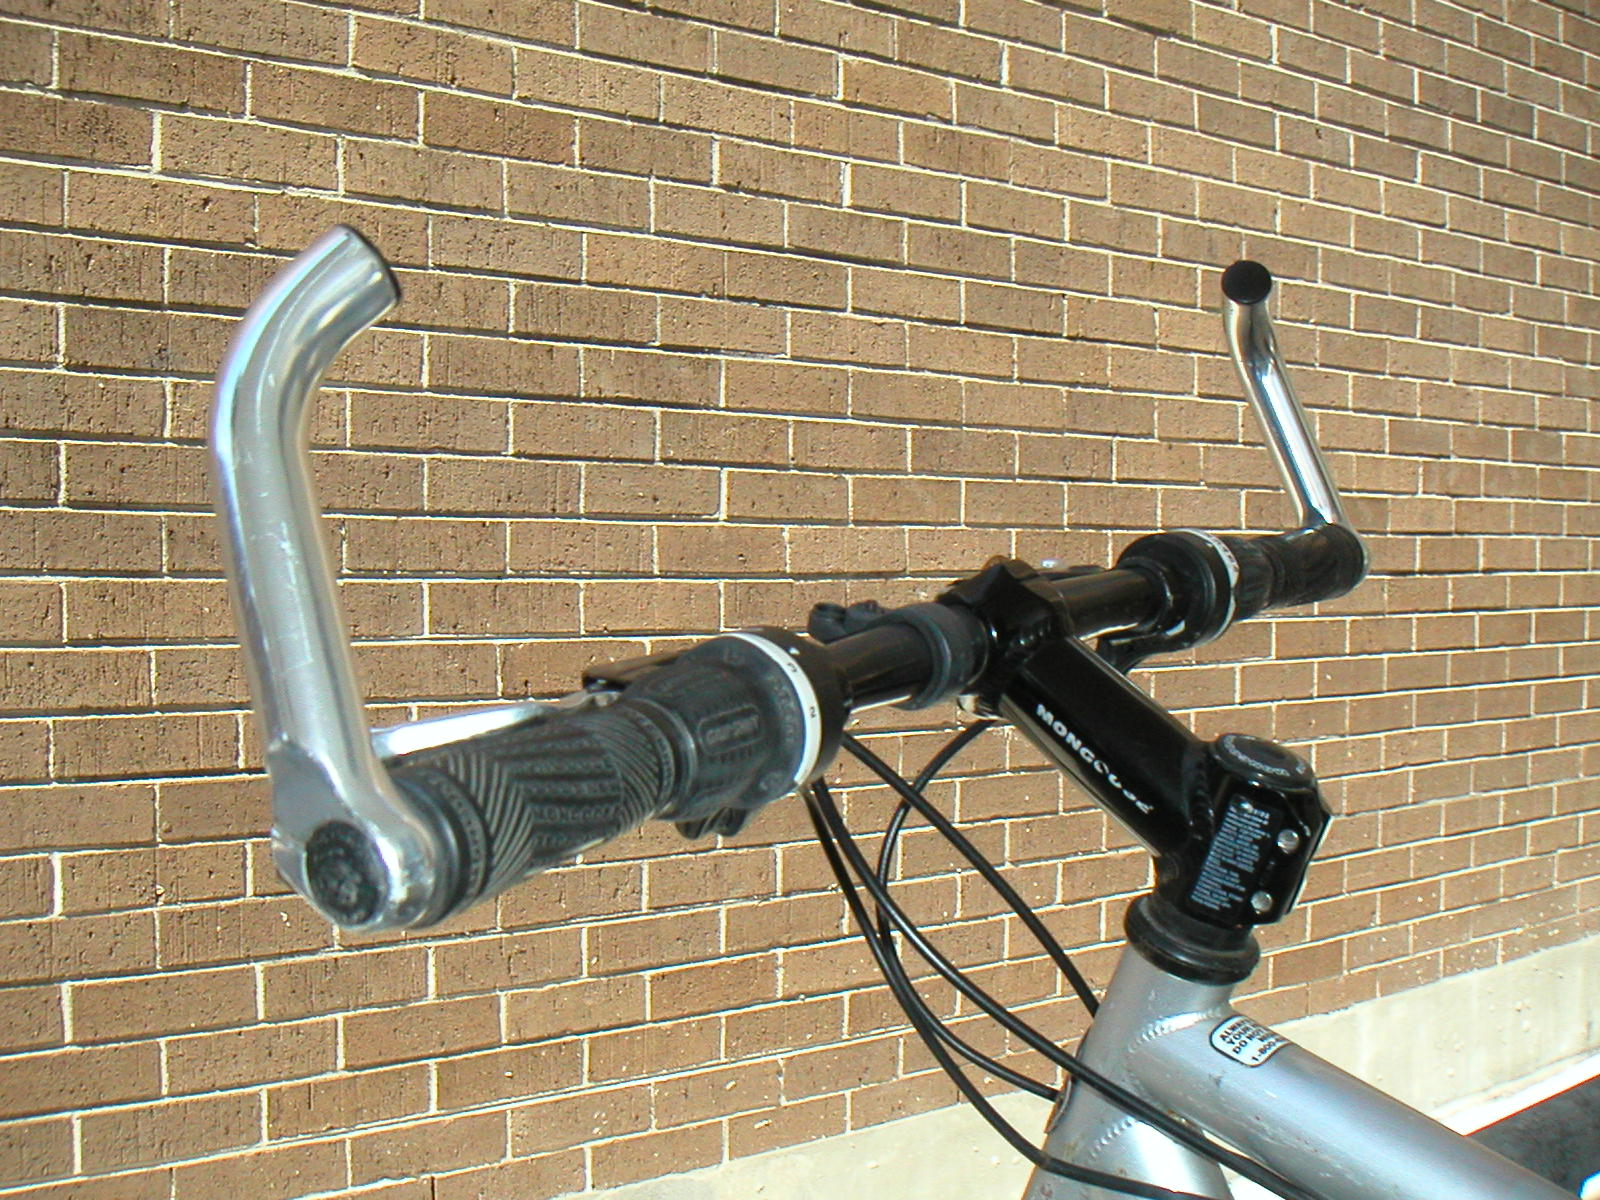 Bar end instalado em bike. Foto de Andrew Dressel, Wikimedia Commons.